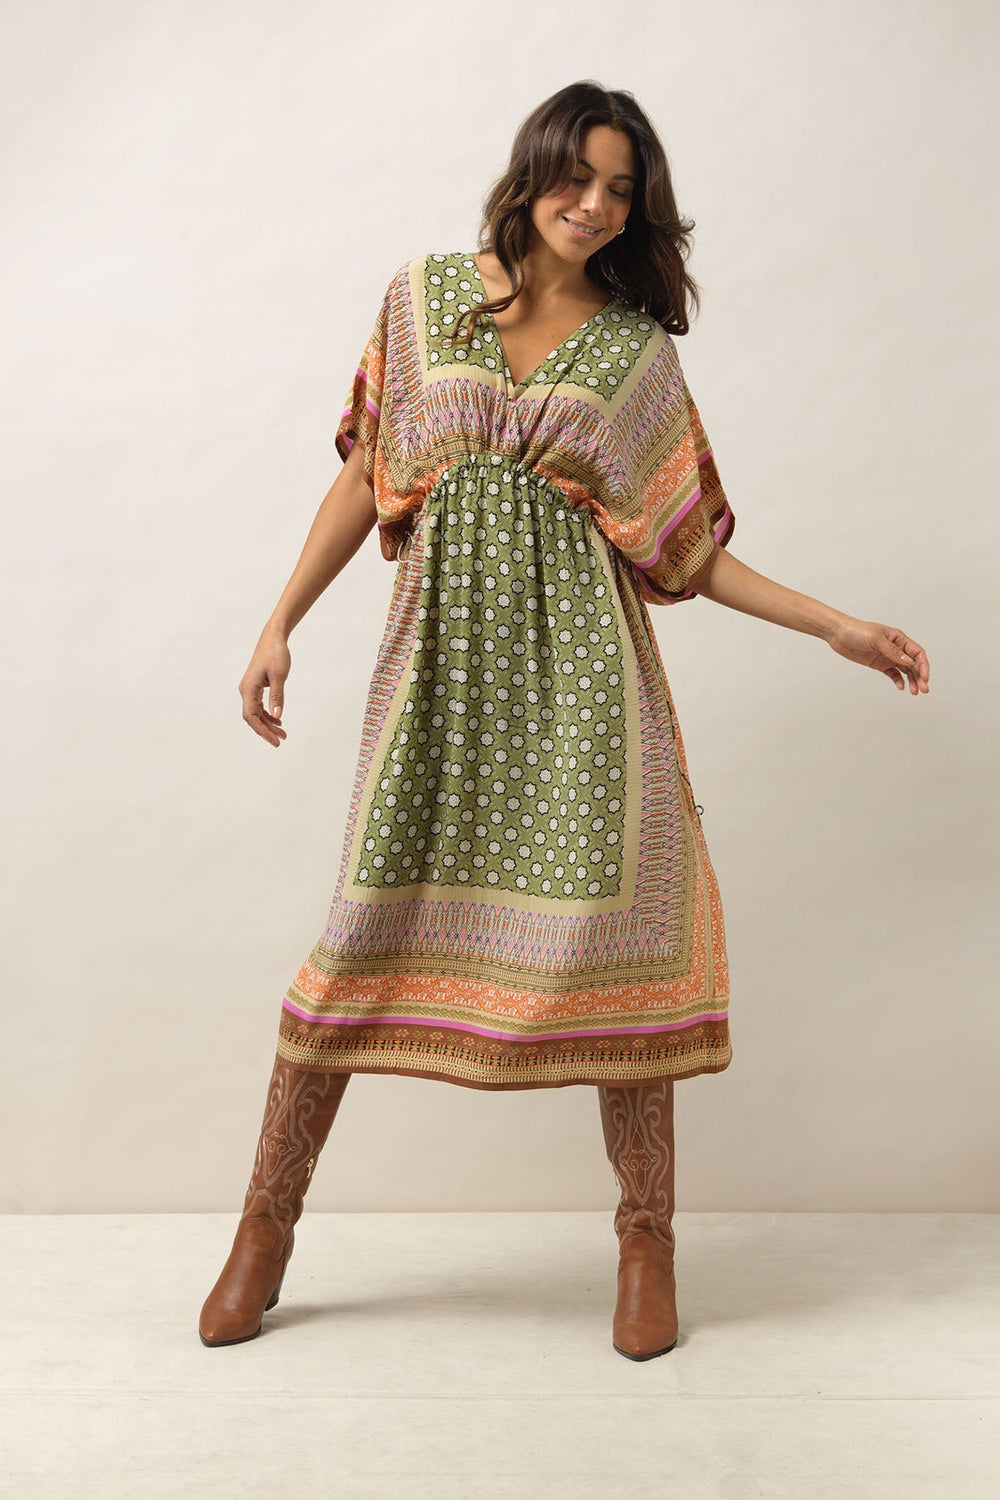 Moorish Green String Dress - One Hundred Stars